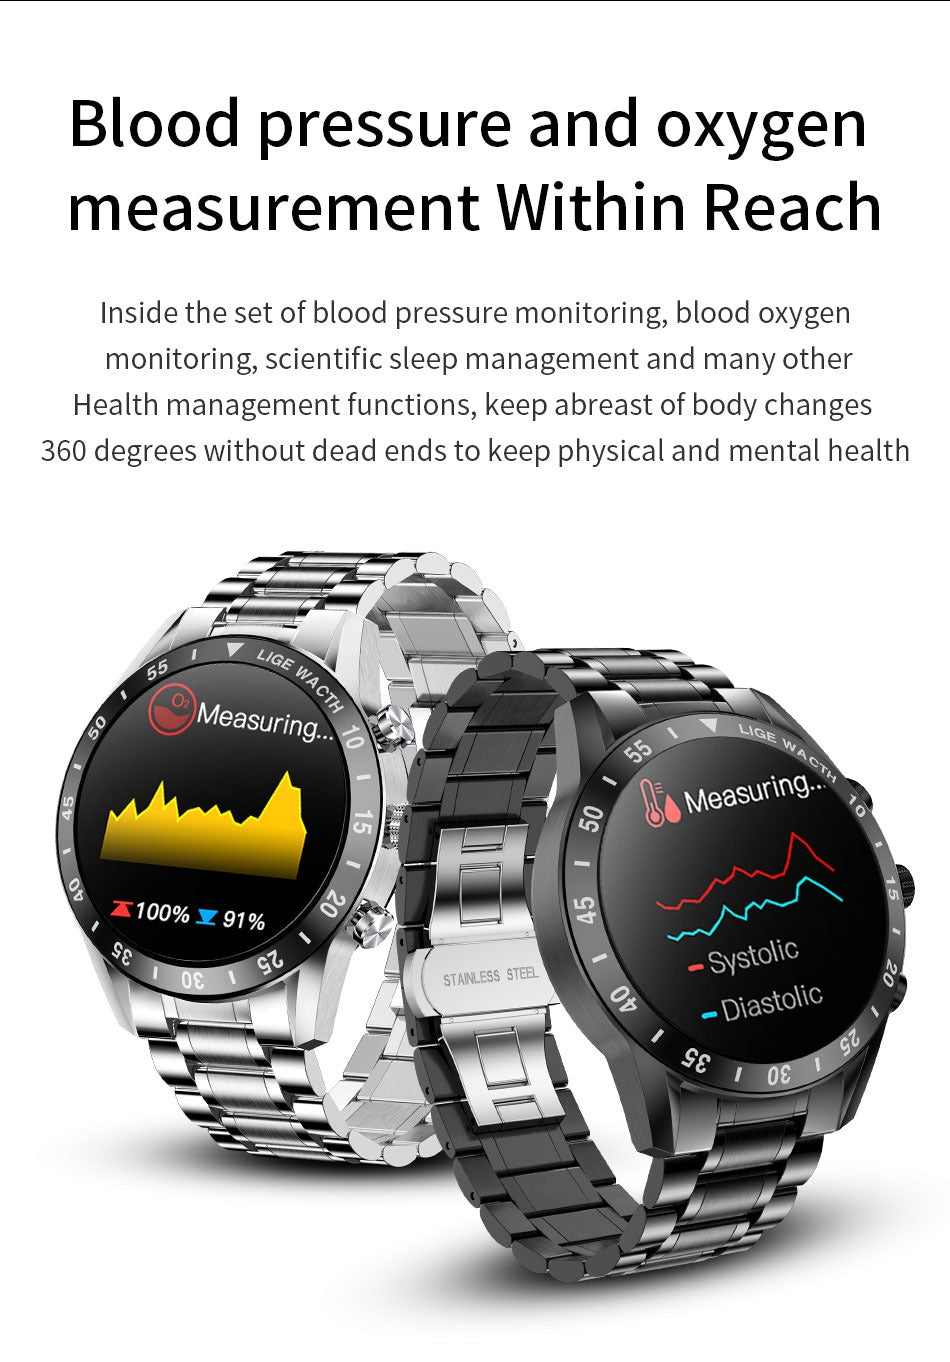 LIGE Men's Smart Watch Black Edition